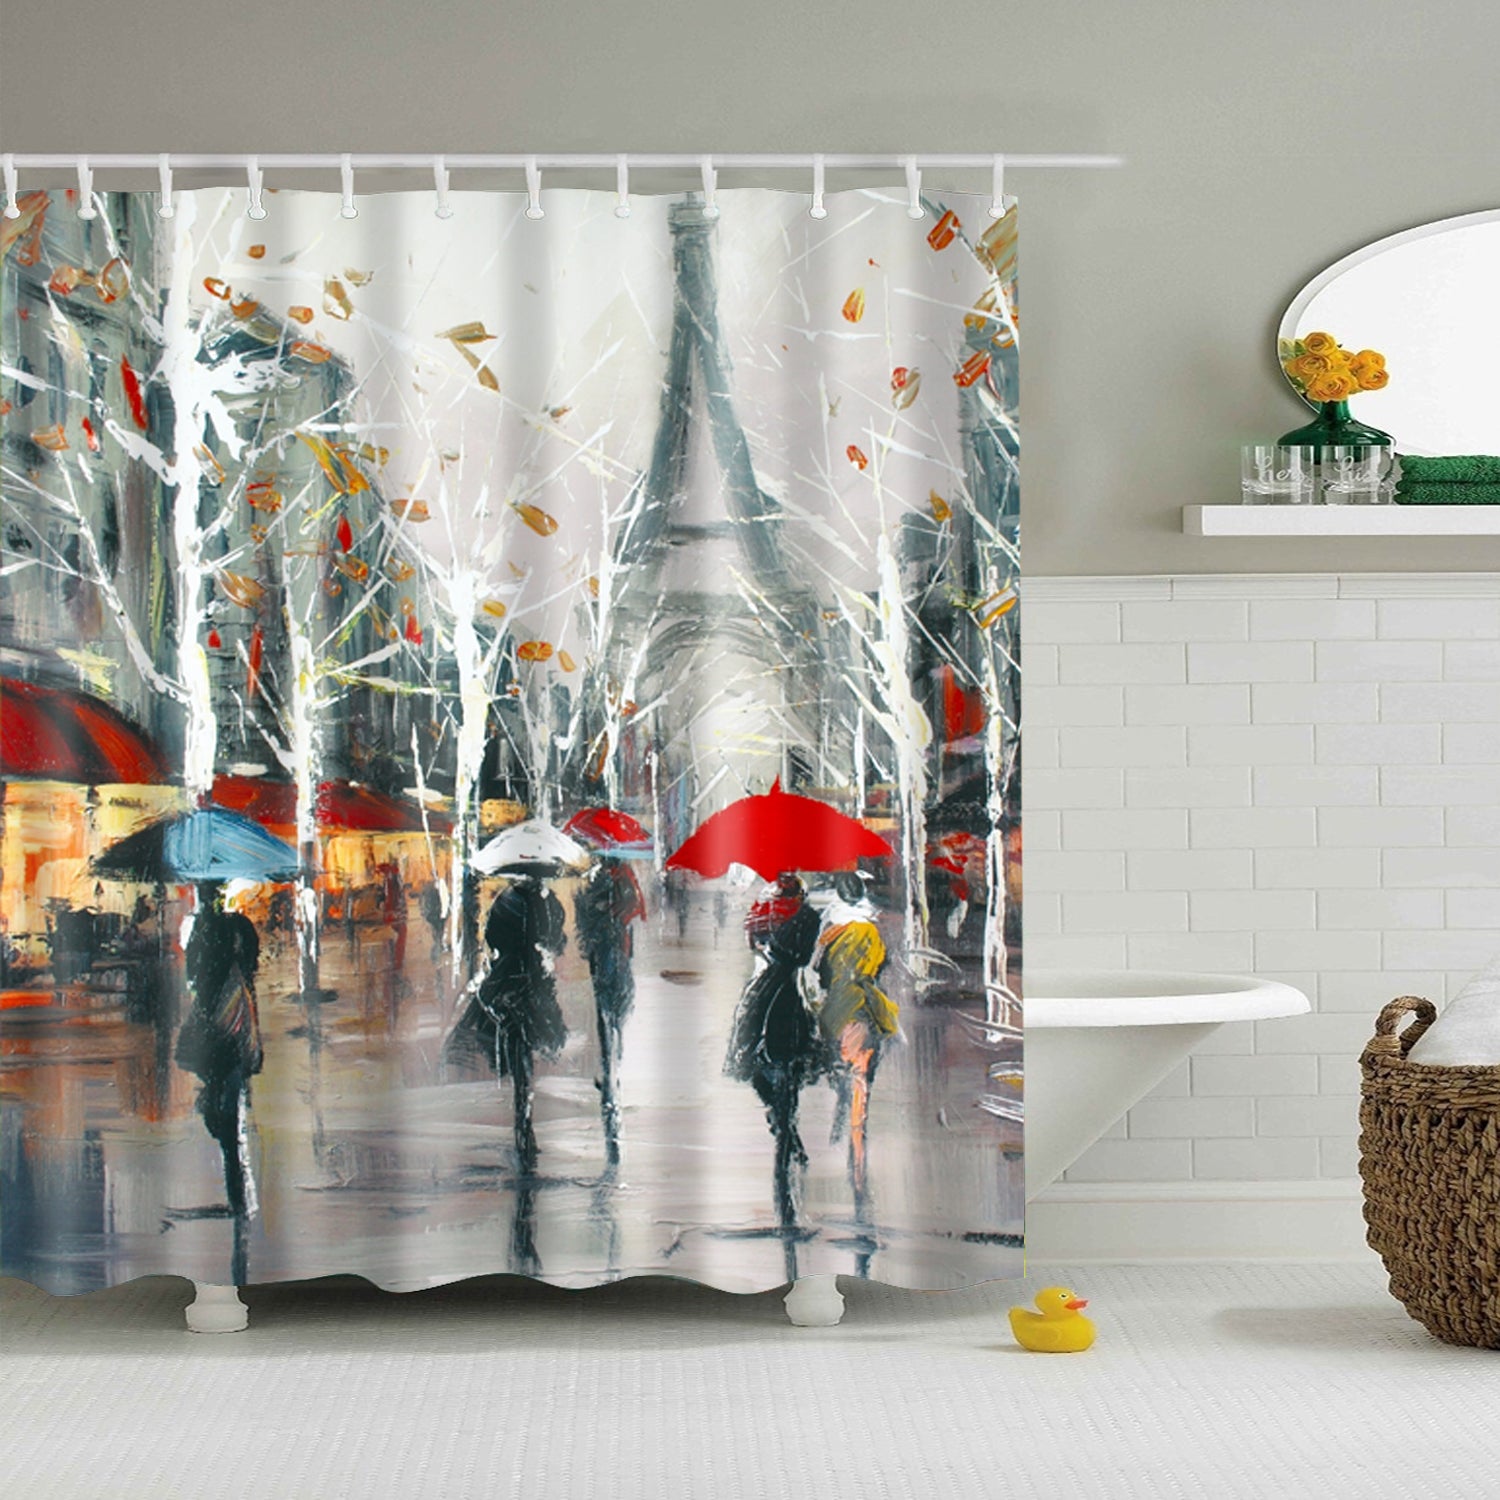 Paris in the Rain Painting Shower Curtain